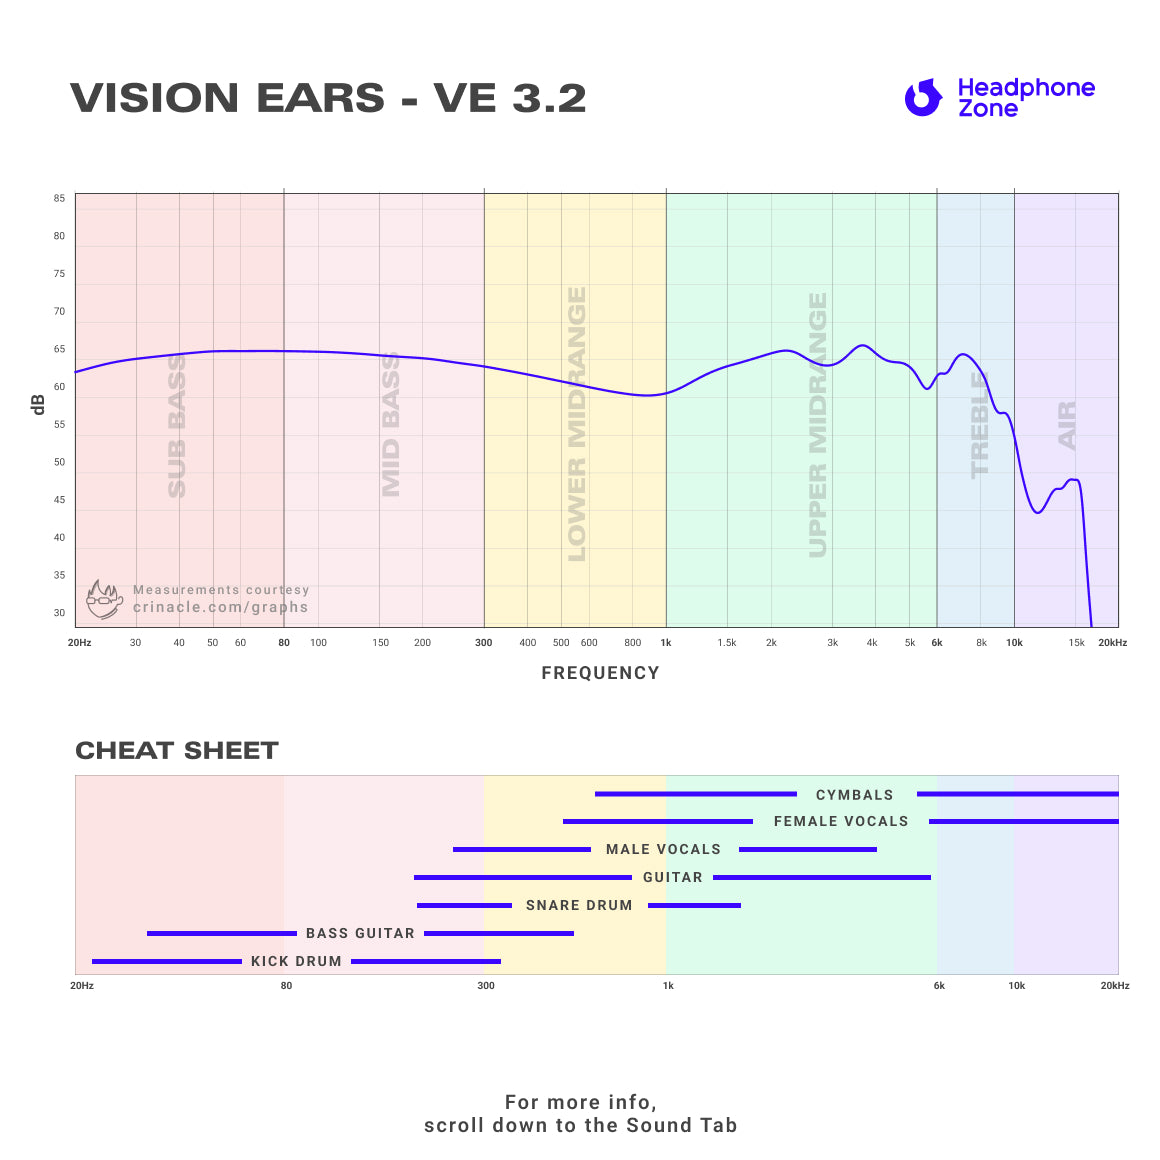 Vision Ears - VE 3.2